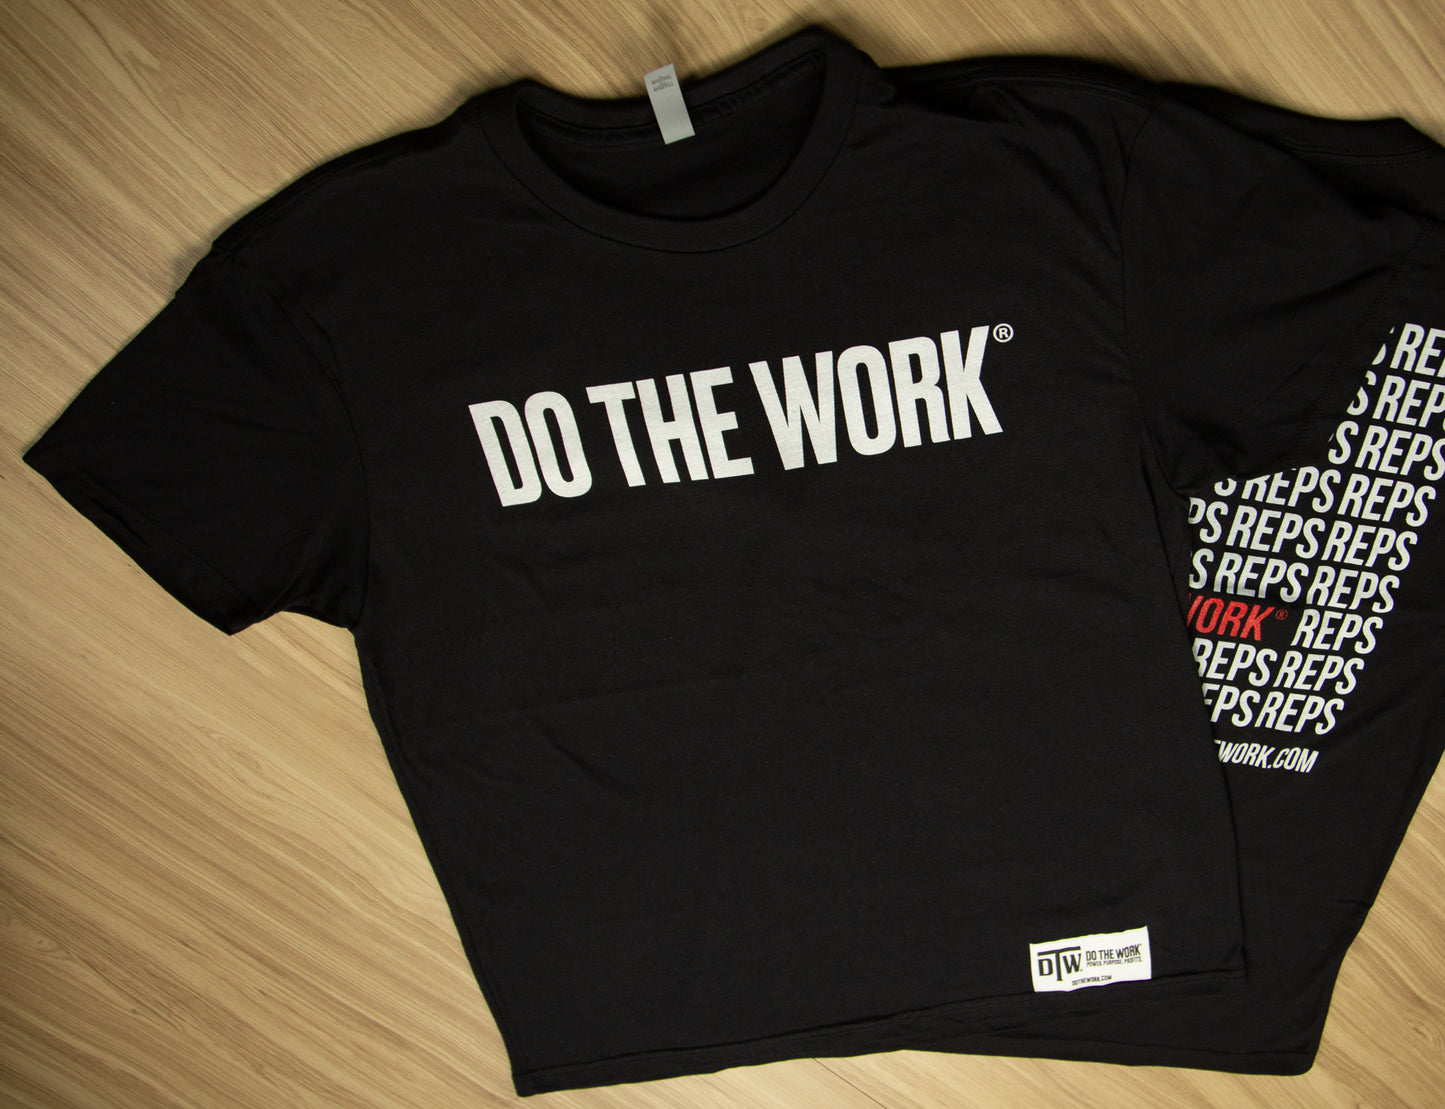 DO THE WORK® Black Tshirt W/ Whtie Tag